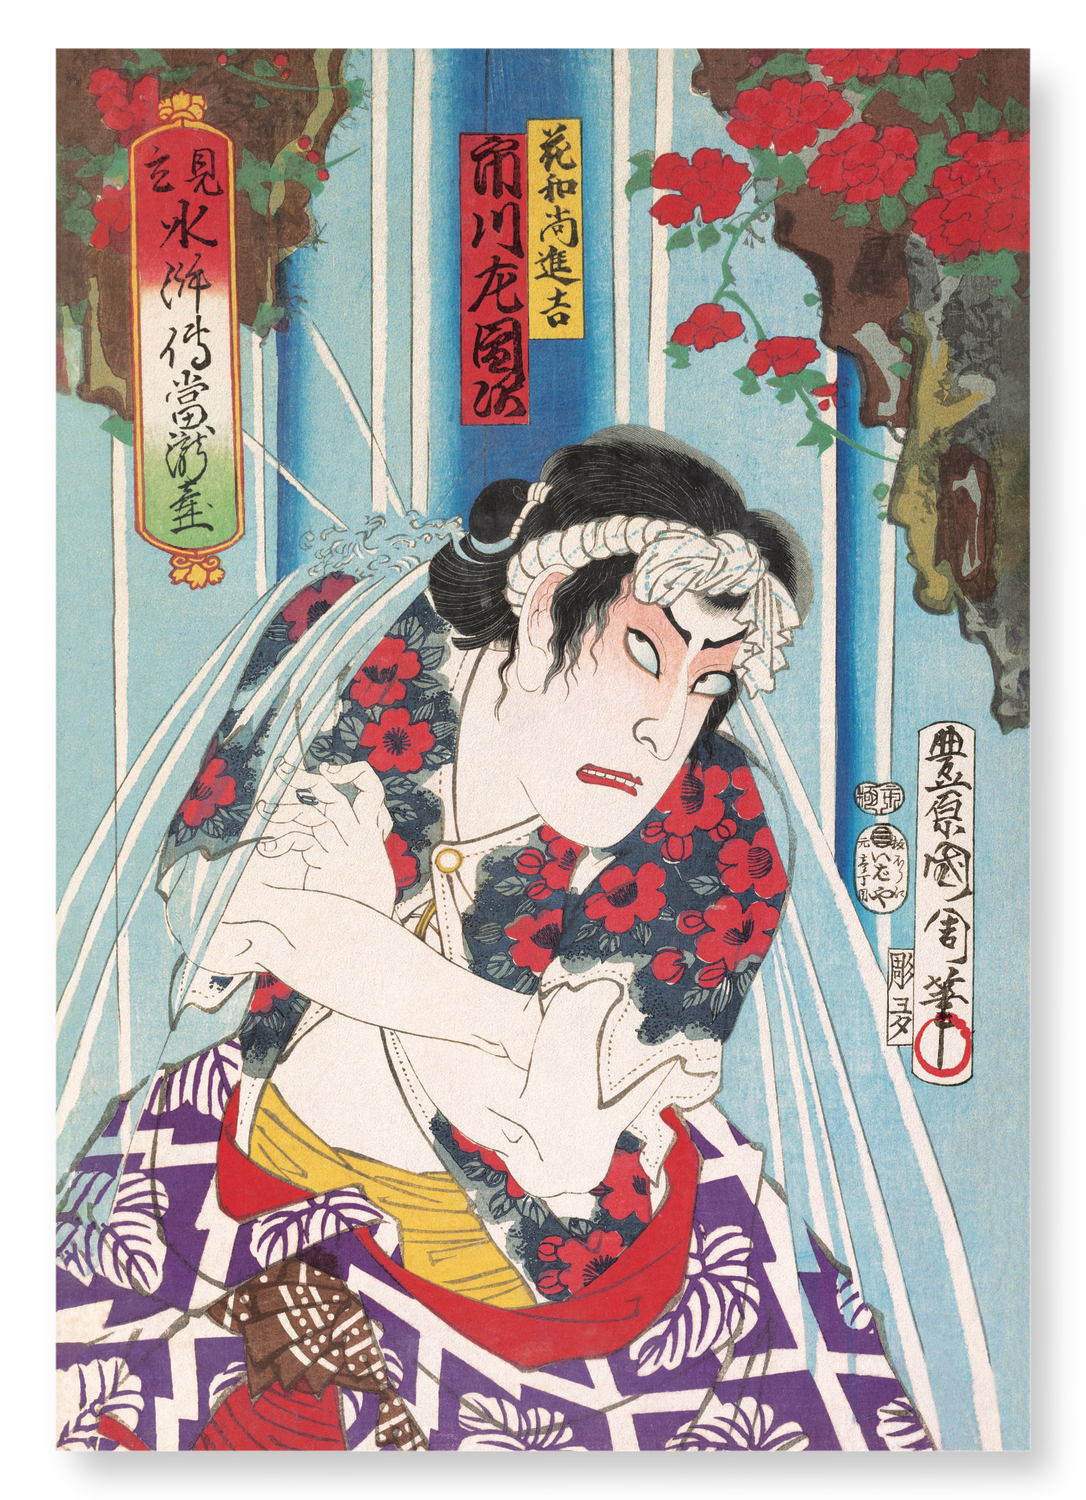 ACTOR ICHIKAWA SADANJI (1875)